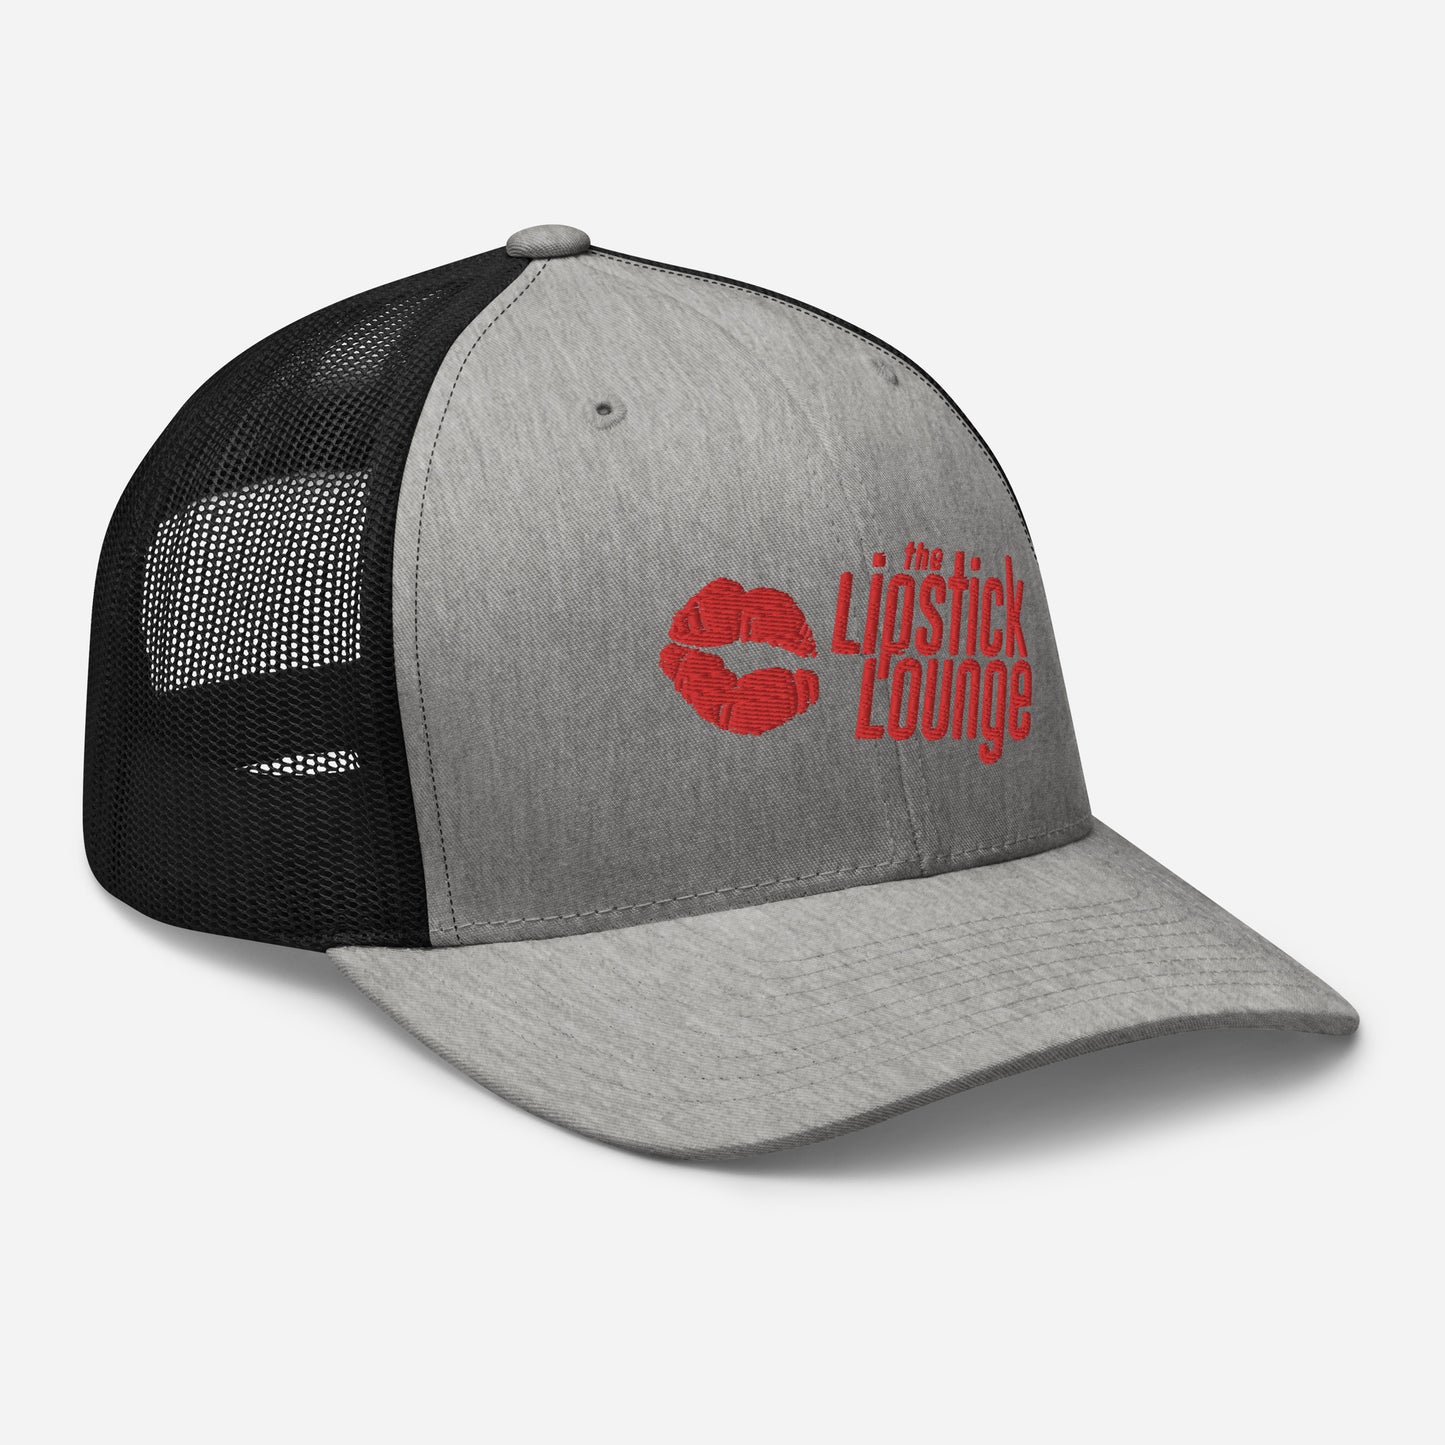 Lipstick Lounge Red Logo Trucker Cap